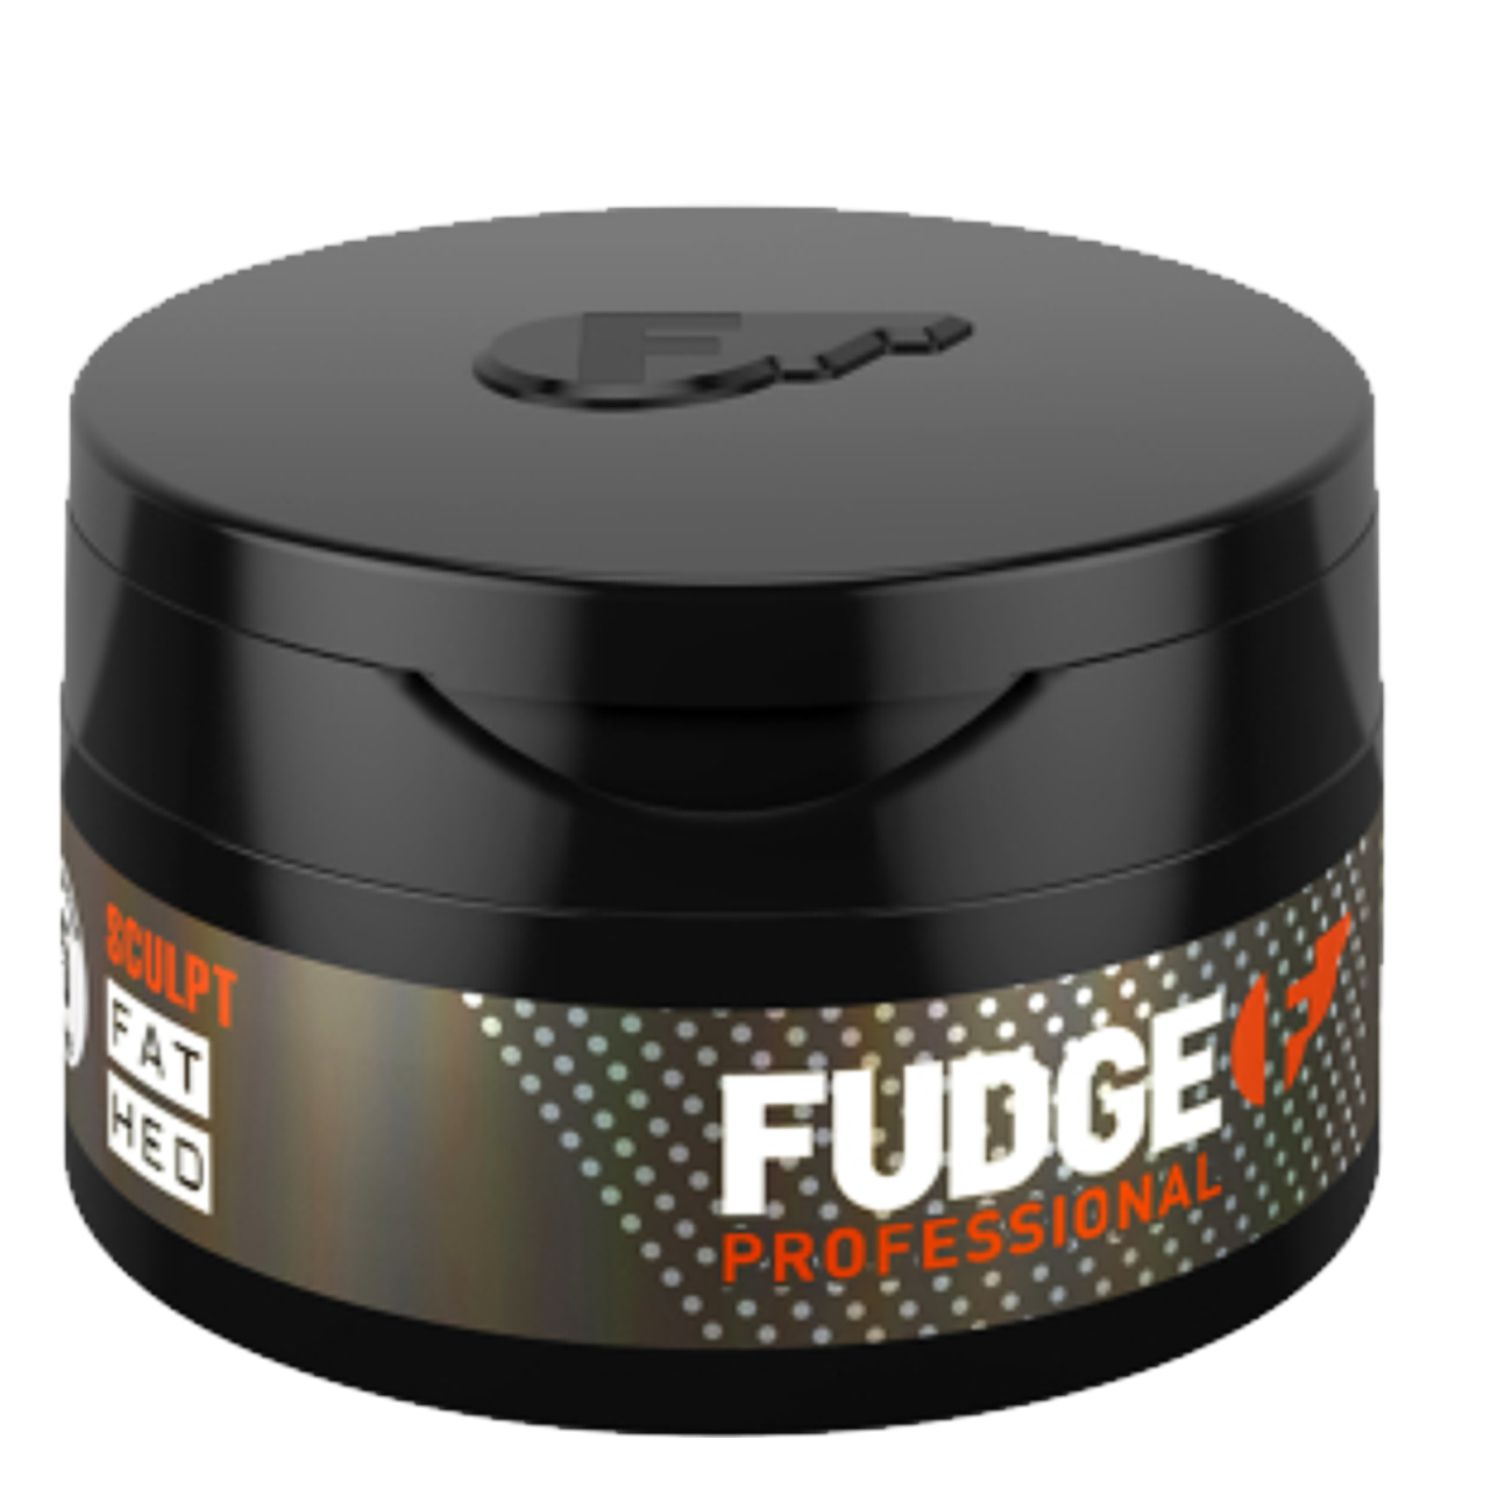 Fudge Professional Fat Hed 75 g